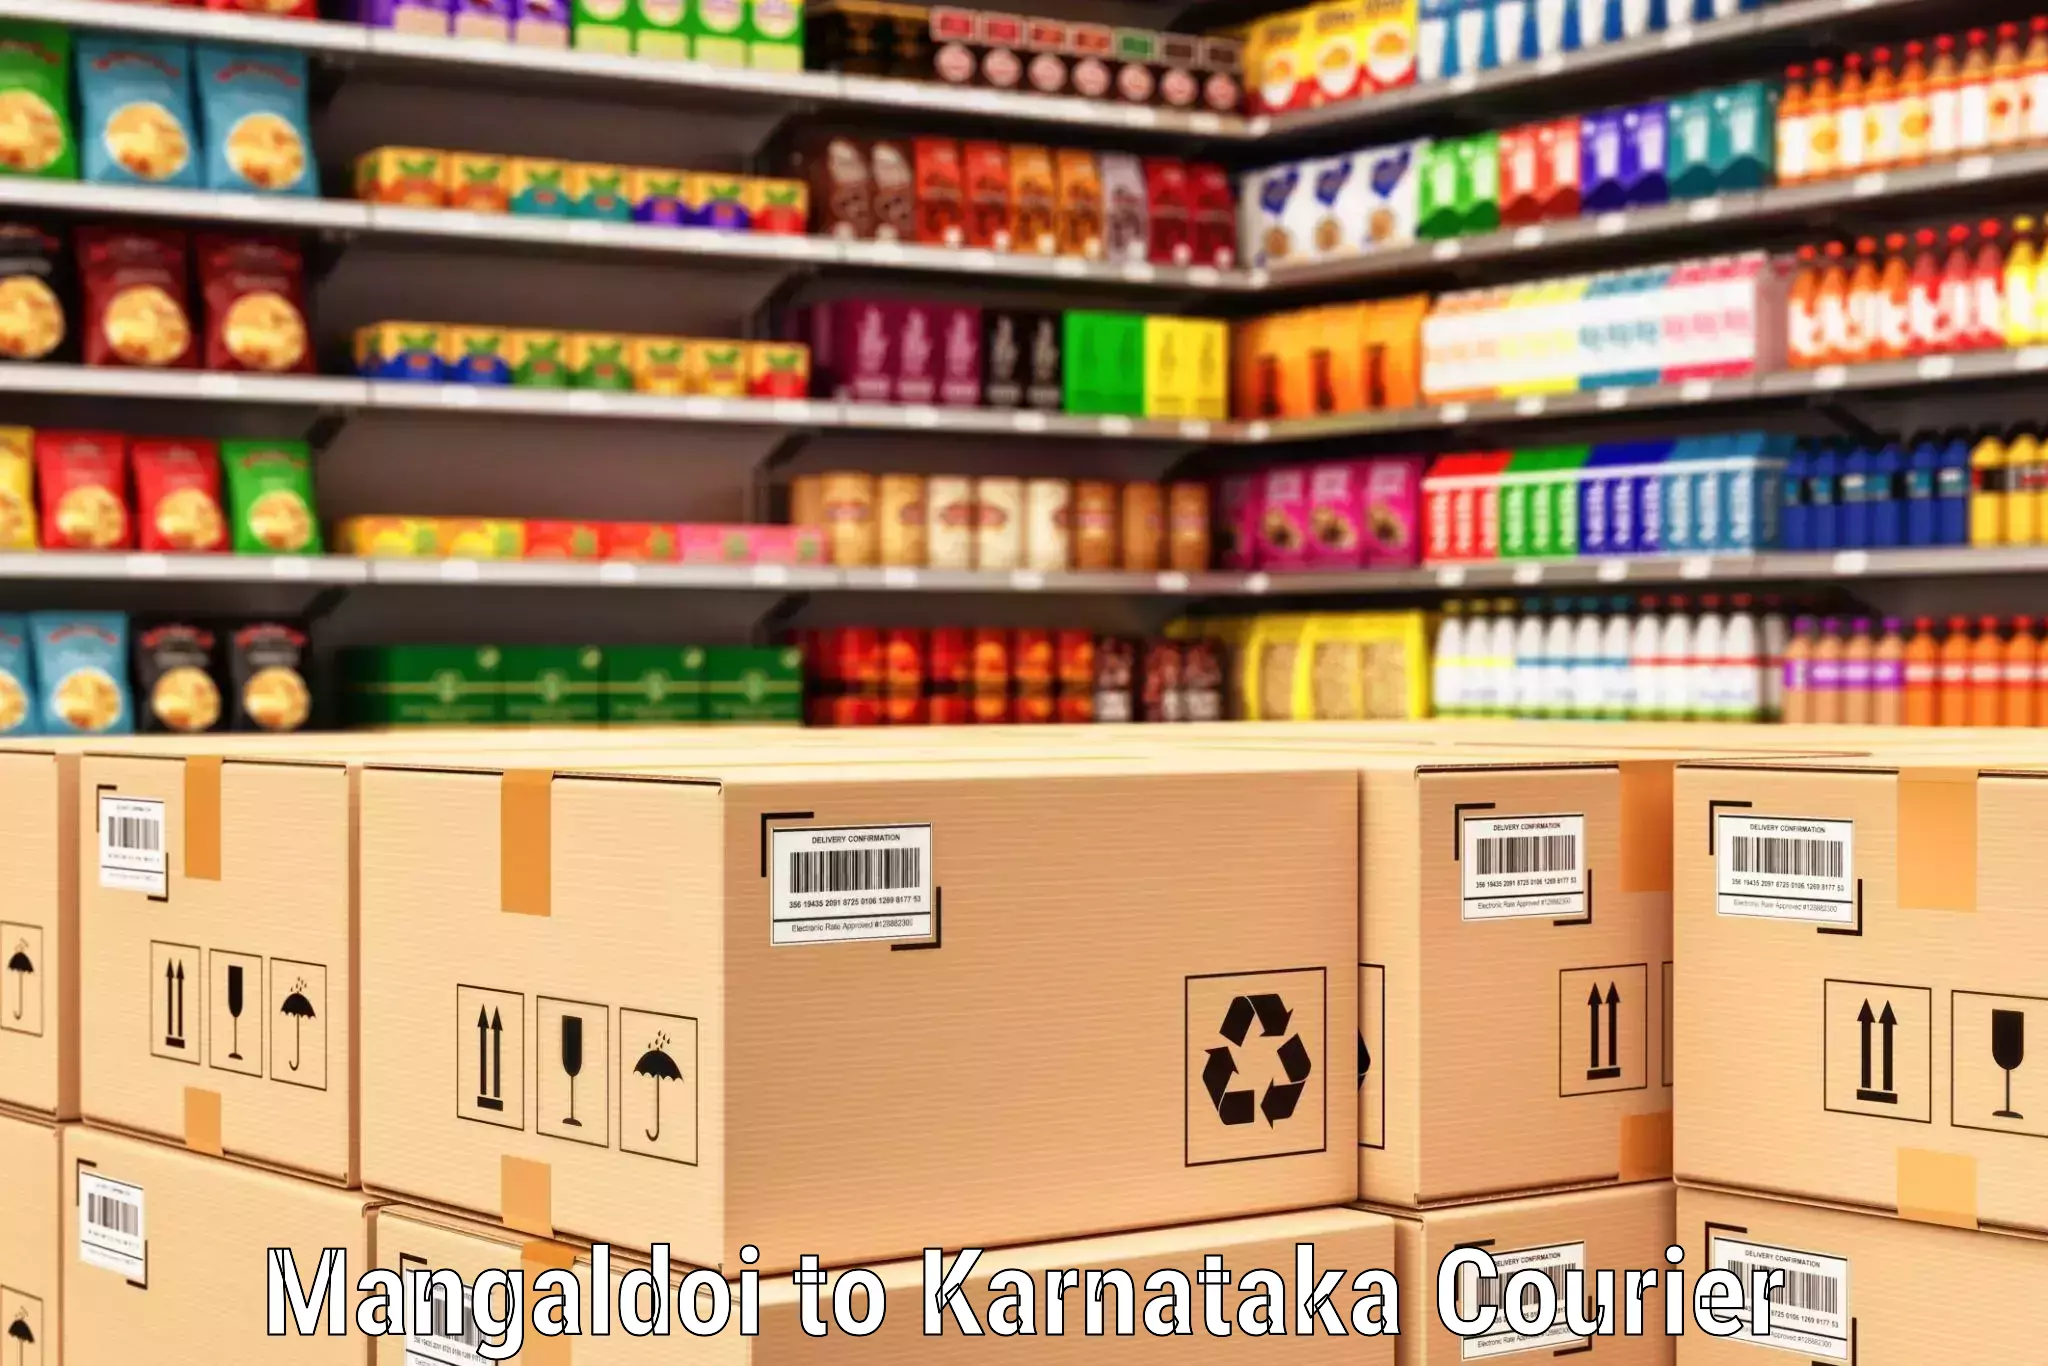 Package delivery network Mangaldoi to Karnataka